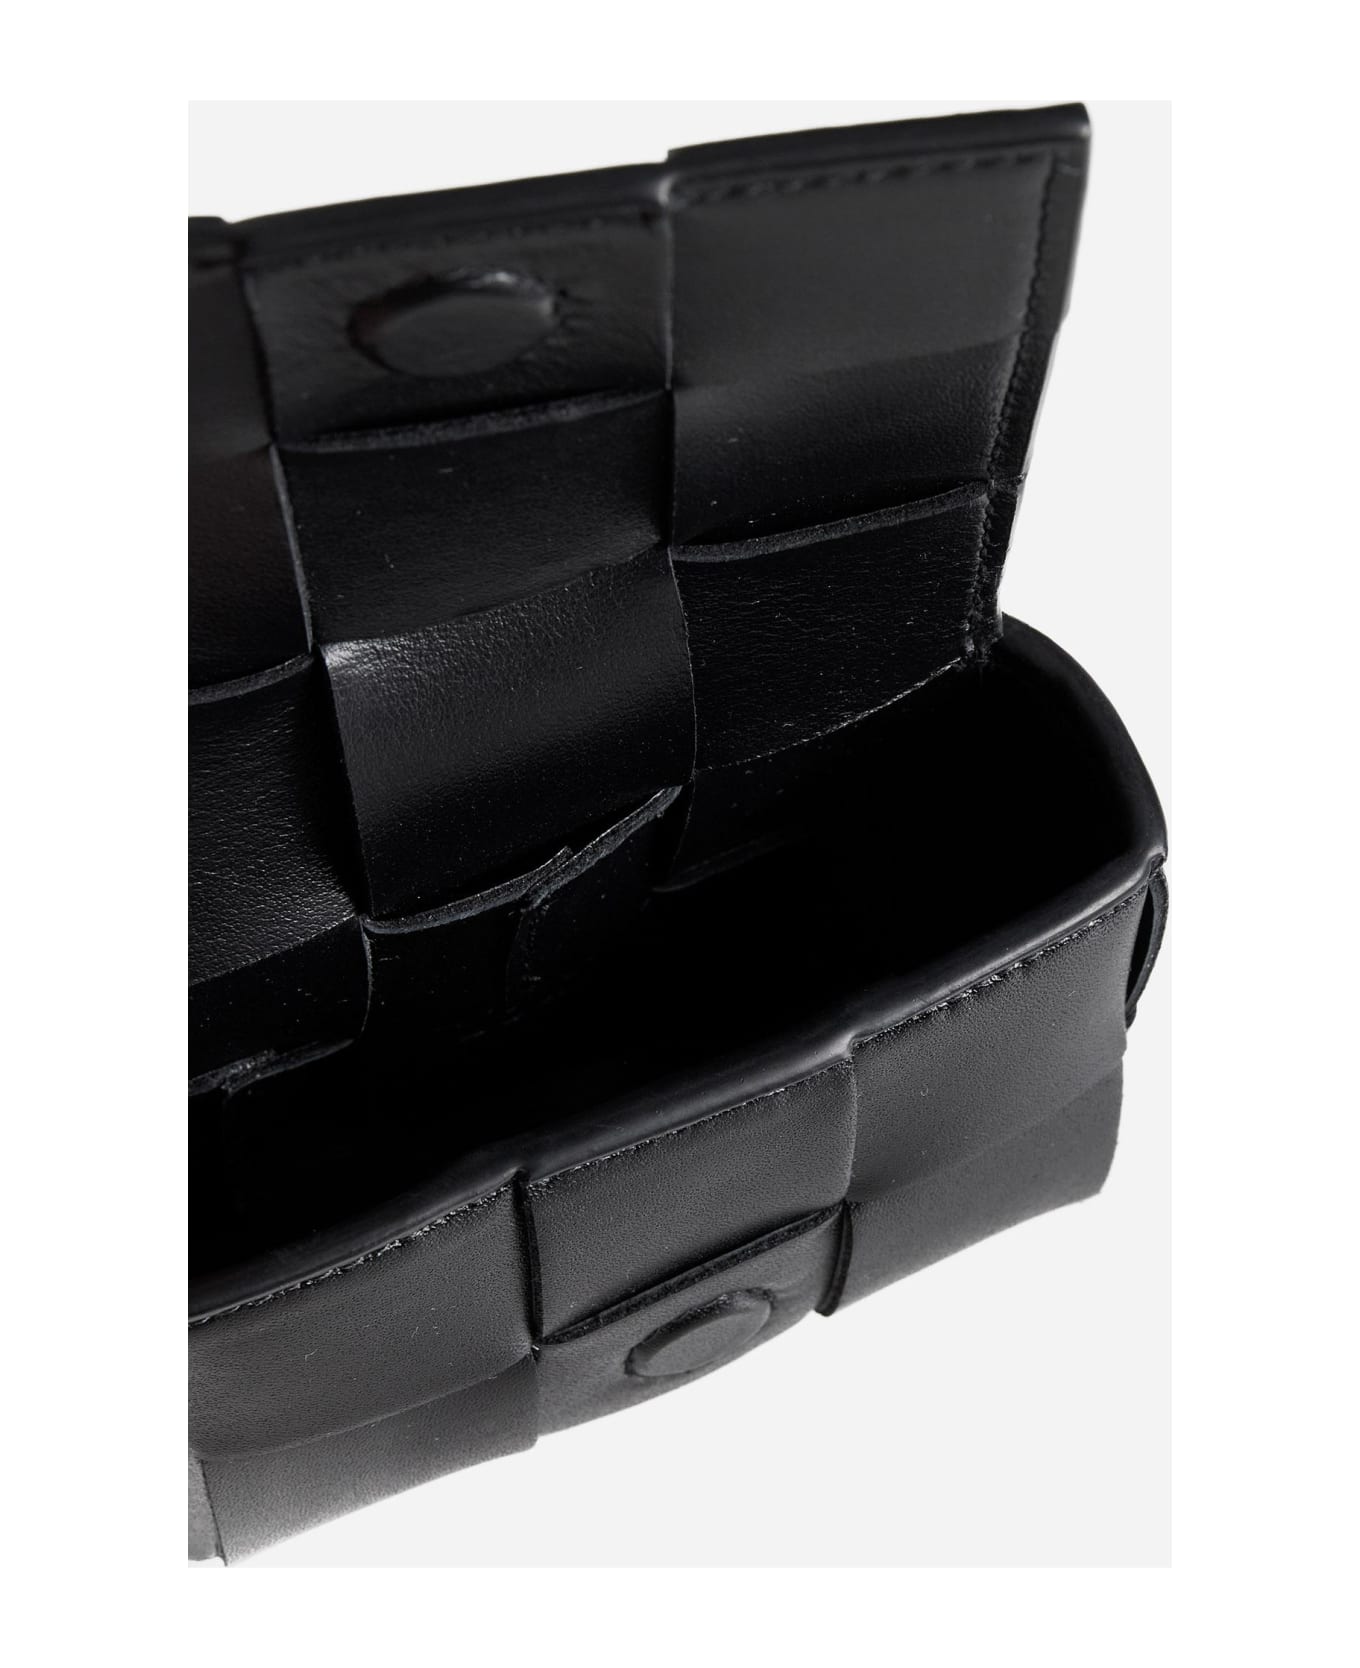 Bottega Veneta Cassette Leather Airpods Case - BLACK デジタルアクセサリー